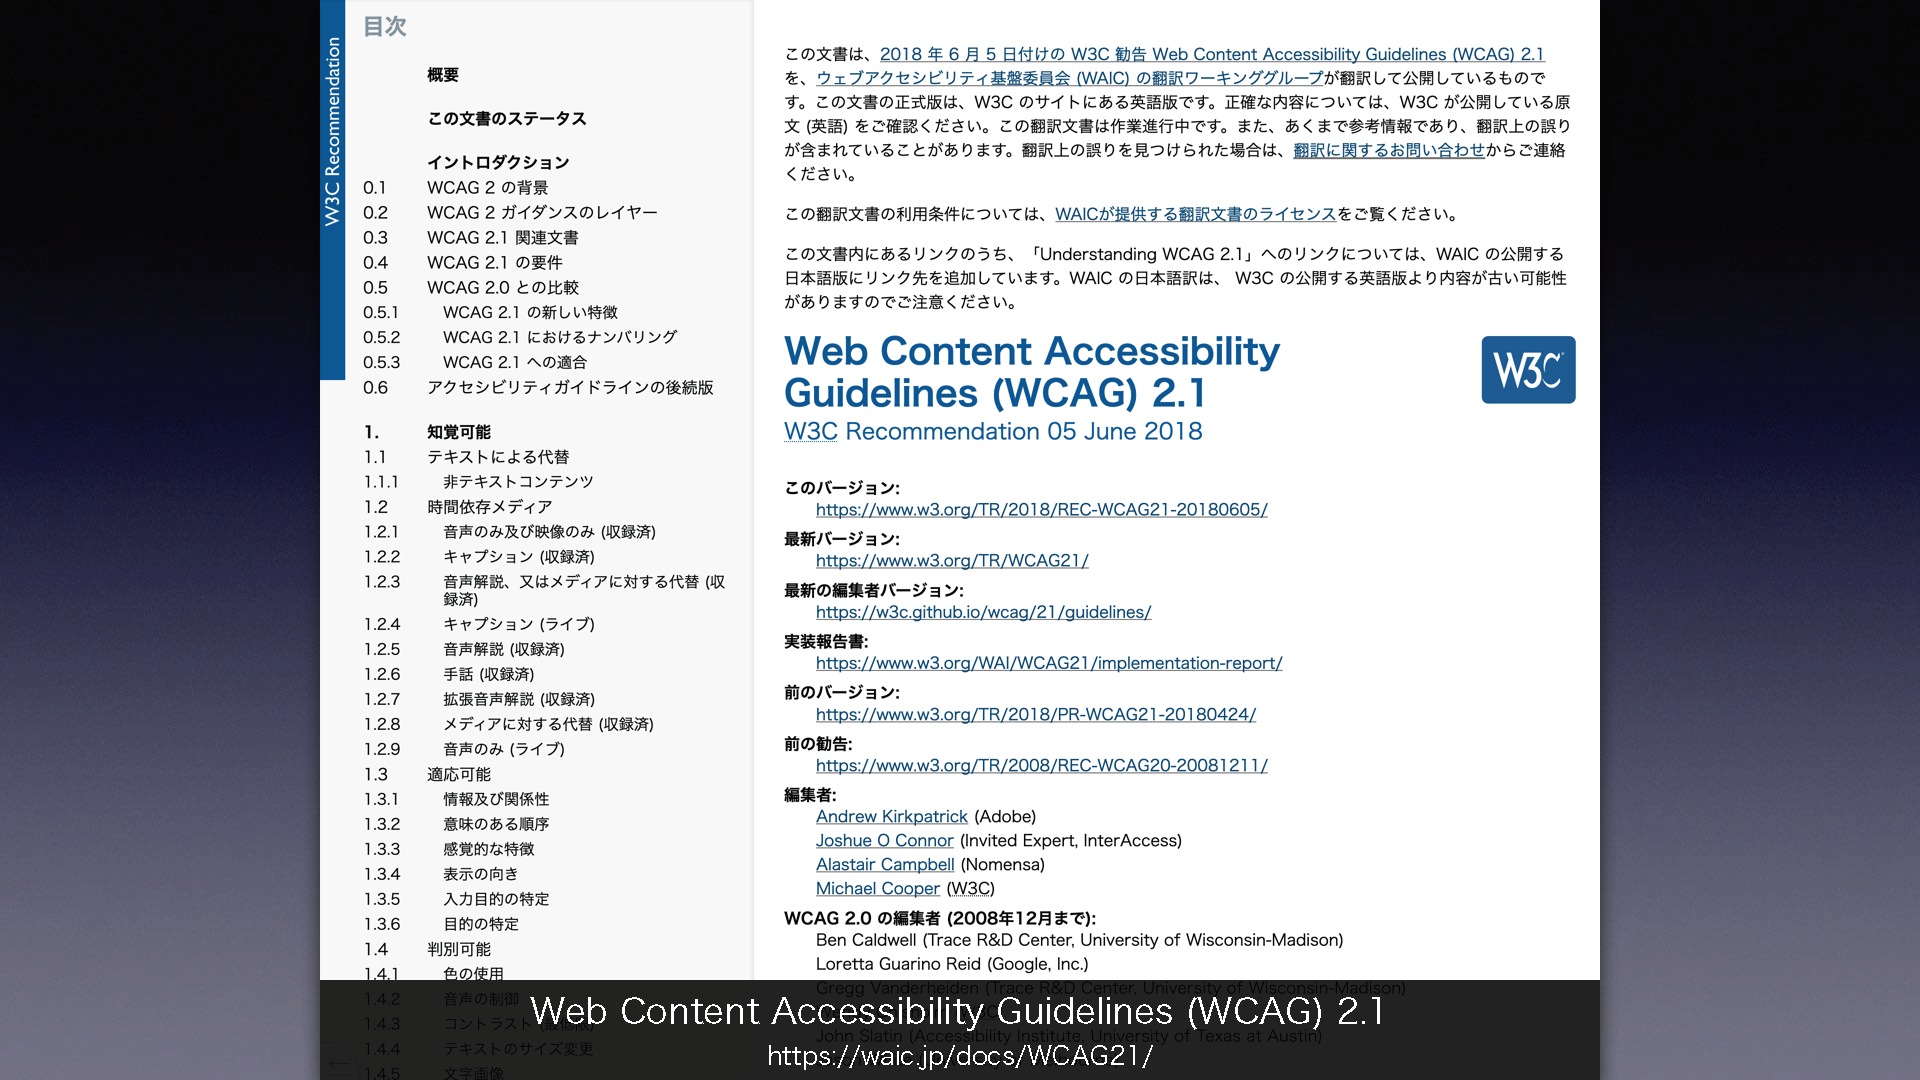 「Web Content Accessibility Guidelines (WCAG) 2.1」について掲載されたウェブページの画像
	